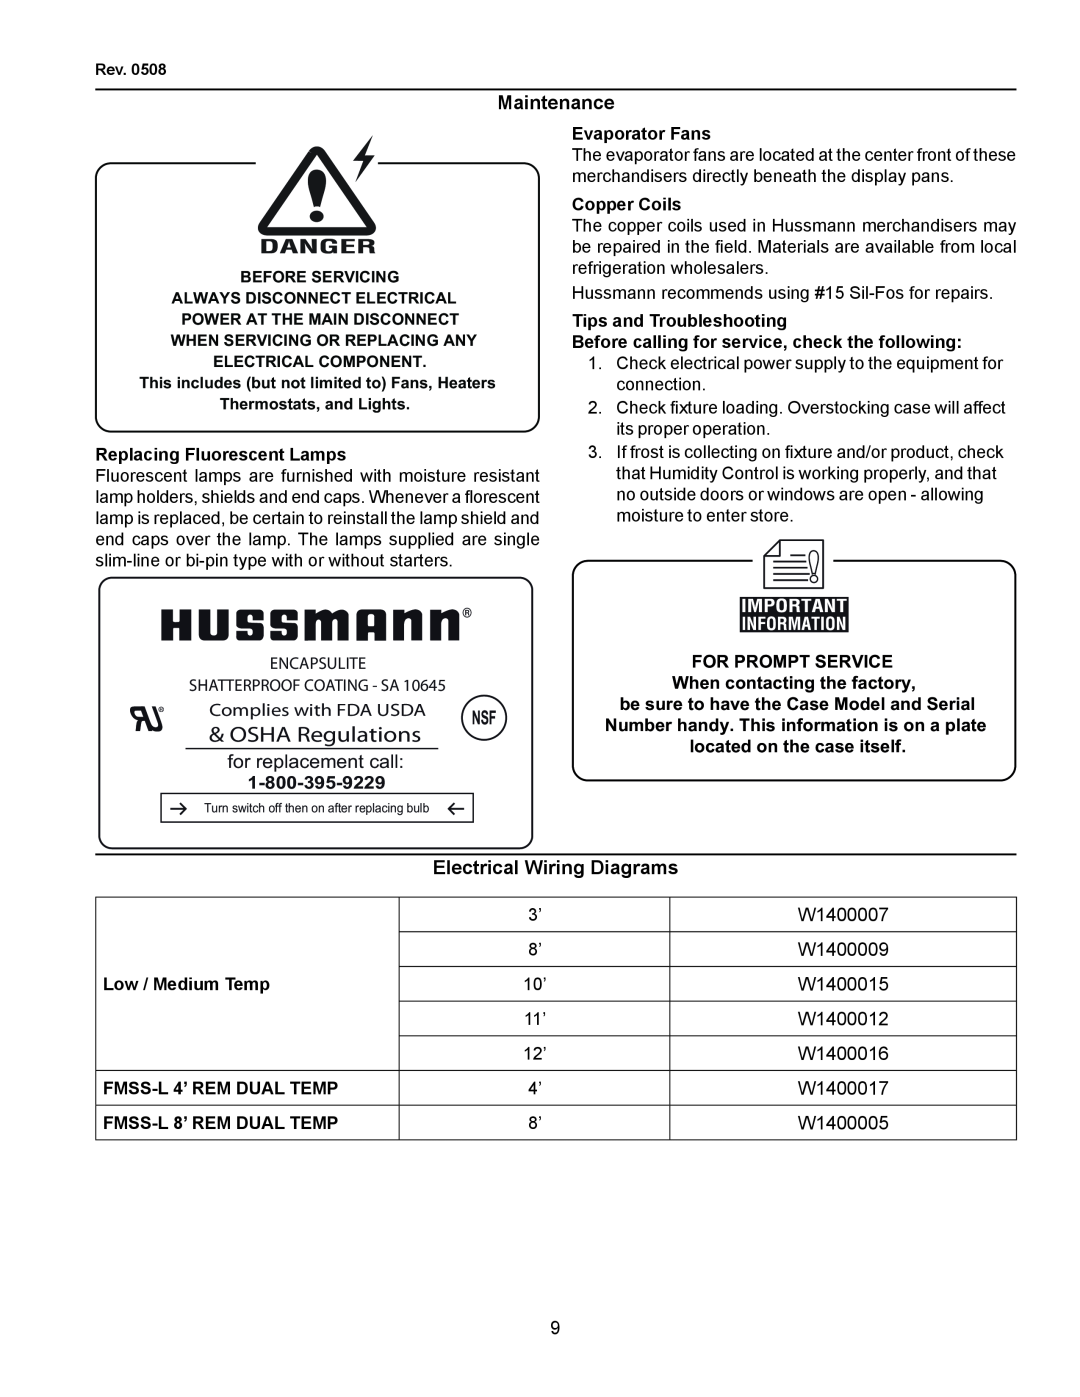 hussman FMSS-L OSHA Regulations, Maintenance, Electrical Wiring Diagrams, Evaporator Fans, Copper Coils, Low / Medium Temp 